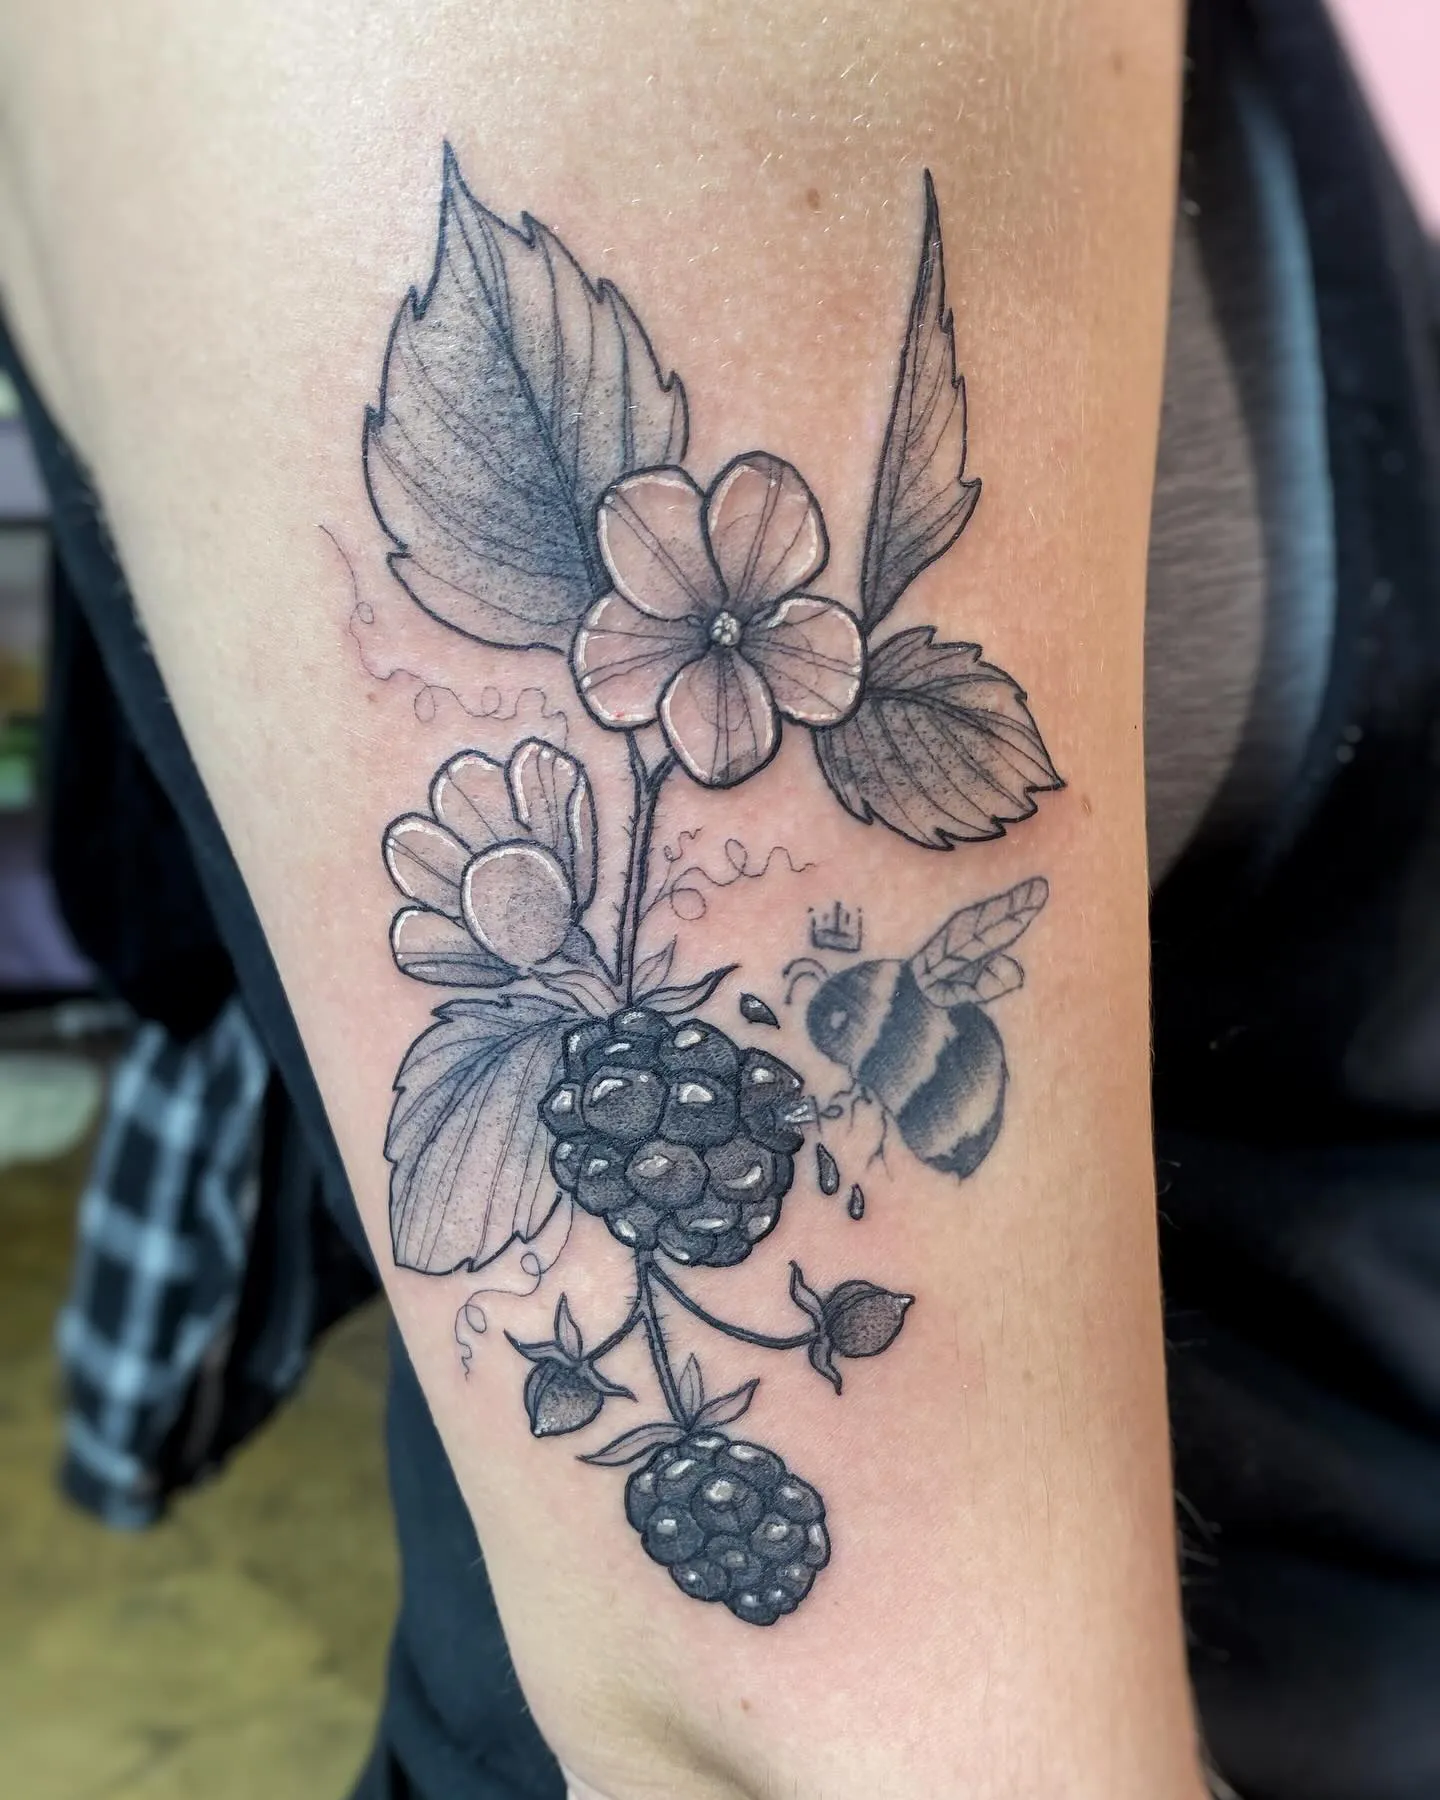 Monochrome blackberry and flower design